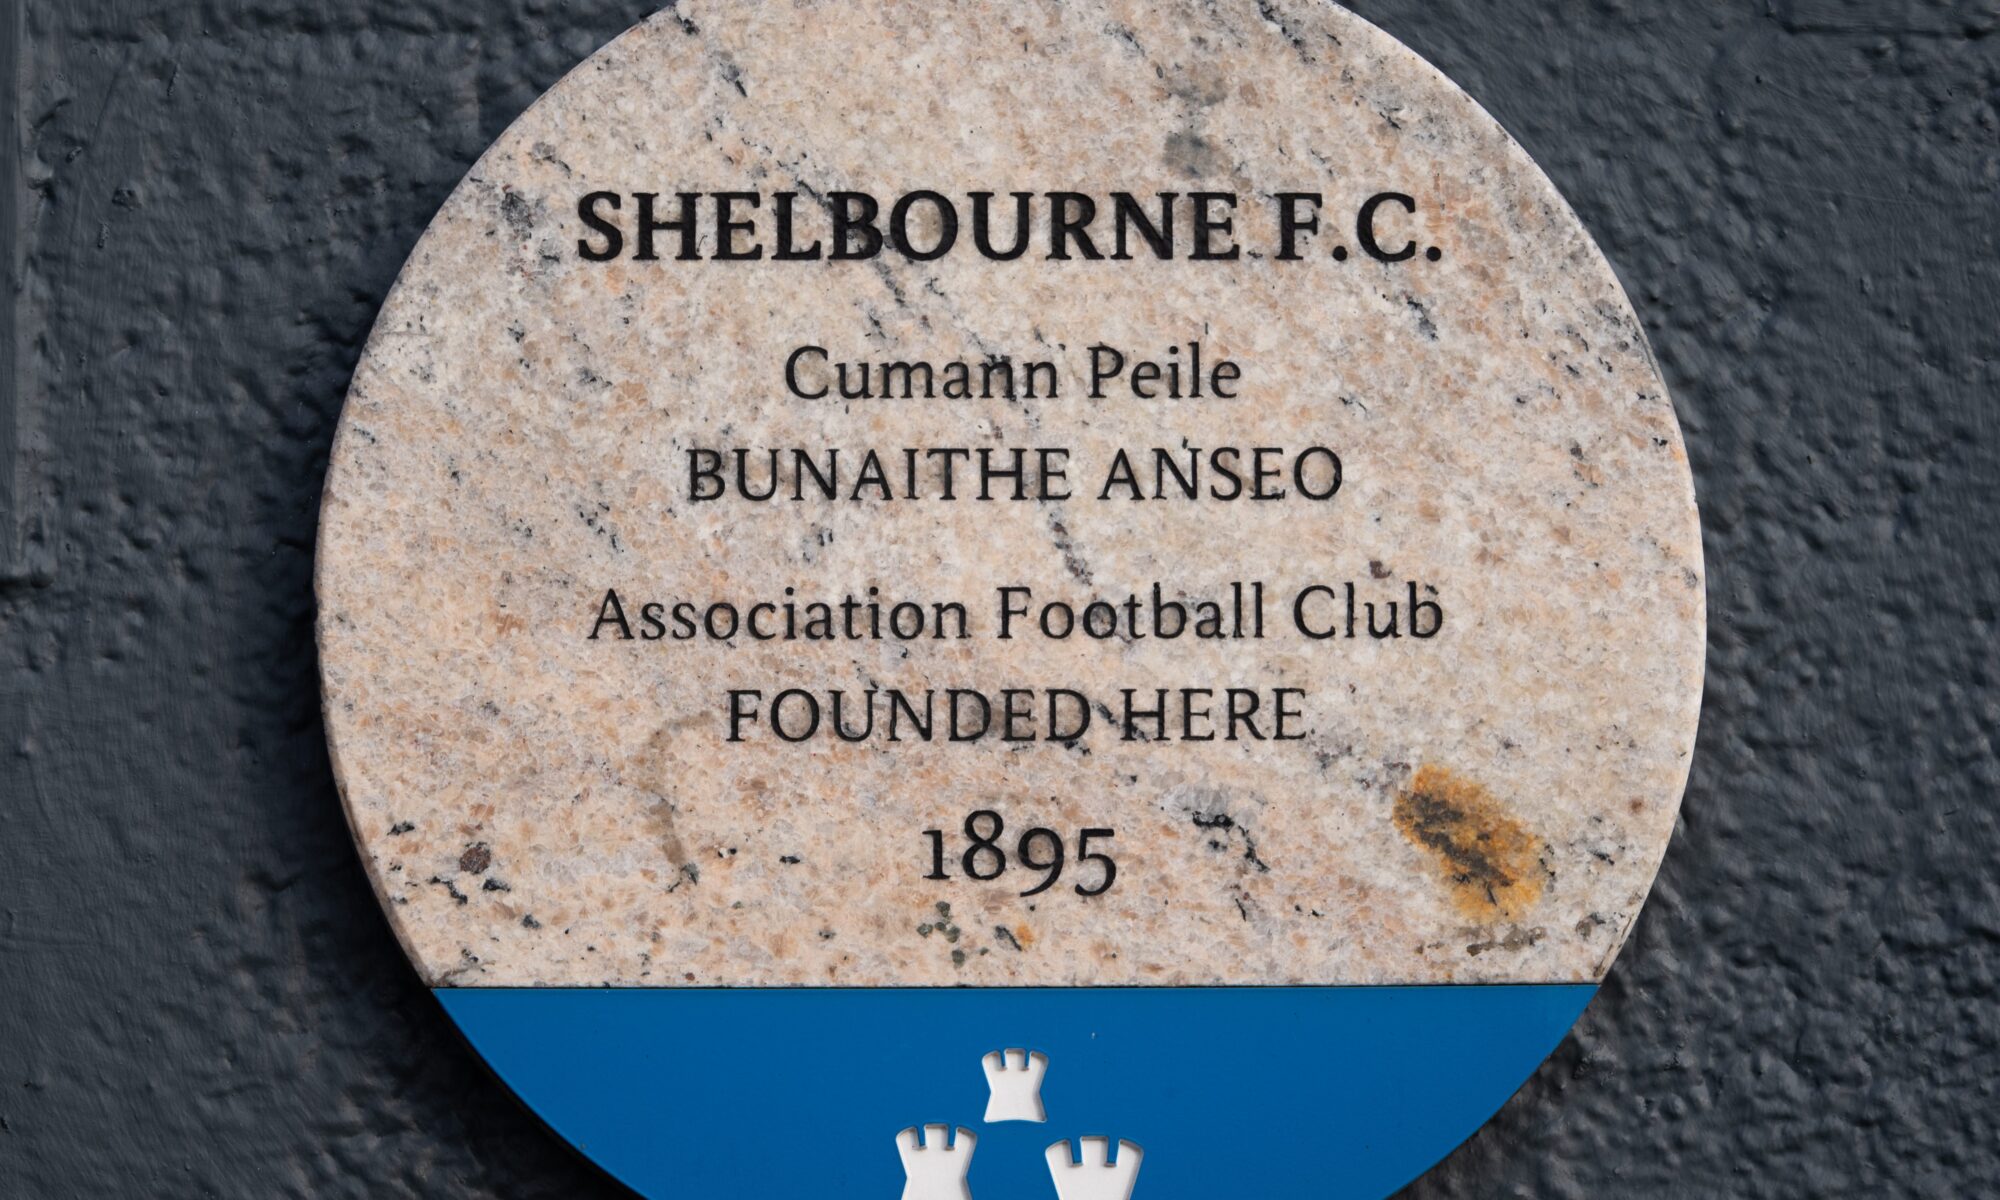 Photograph of Dublin City Council plaque honouring Shelbourne Football Club